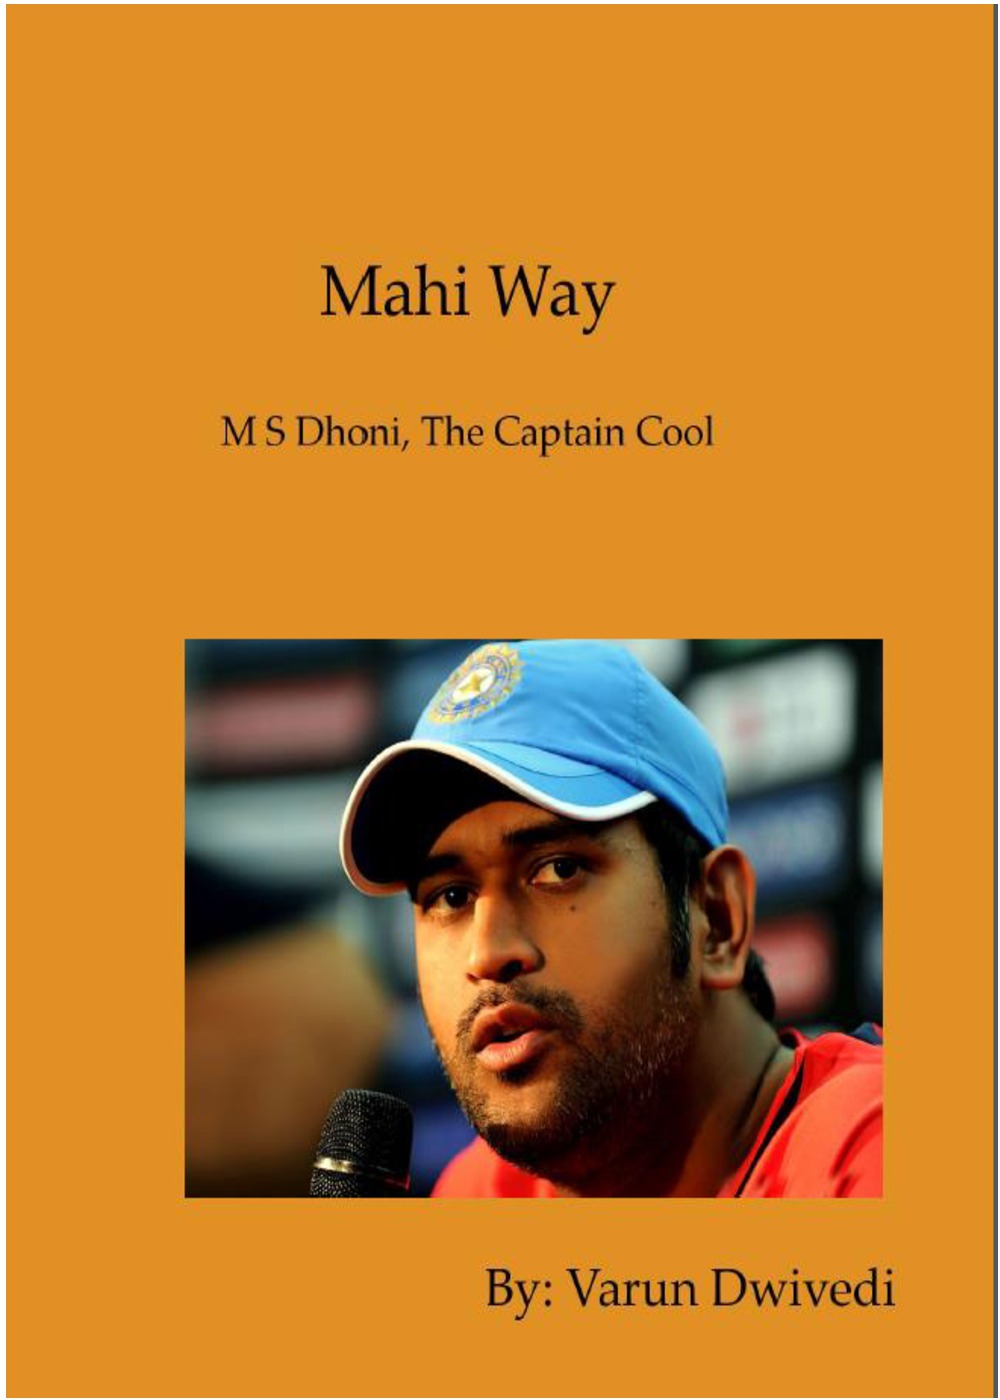 ms dhoni captain cool book pdf free download